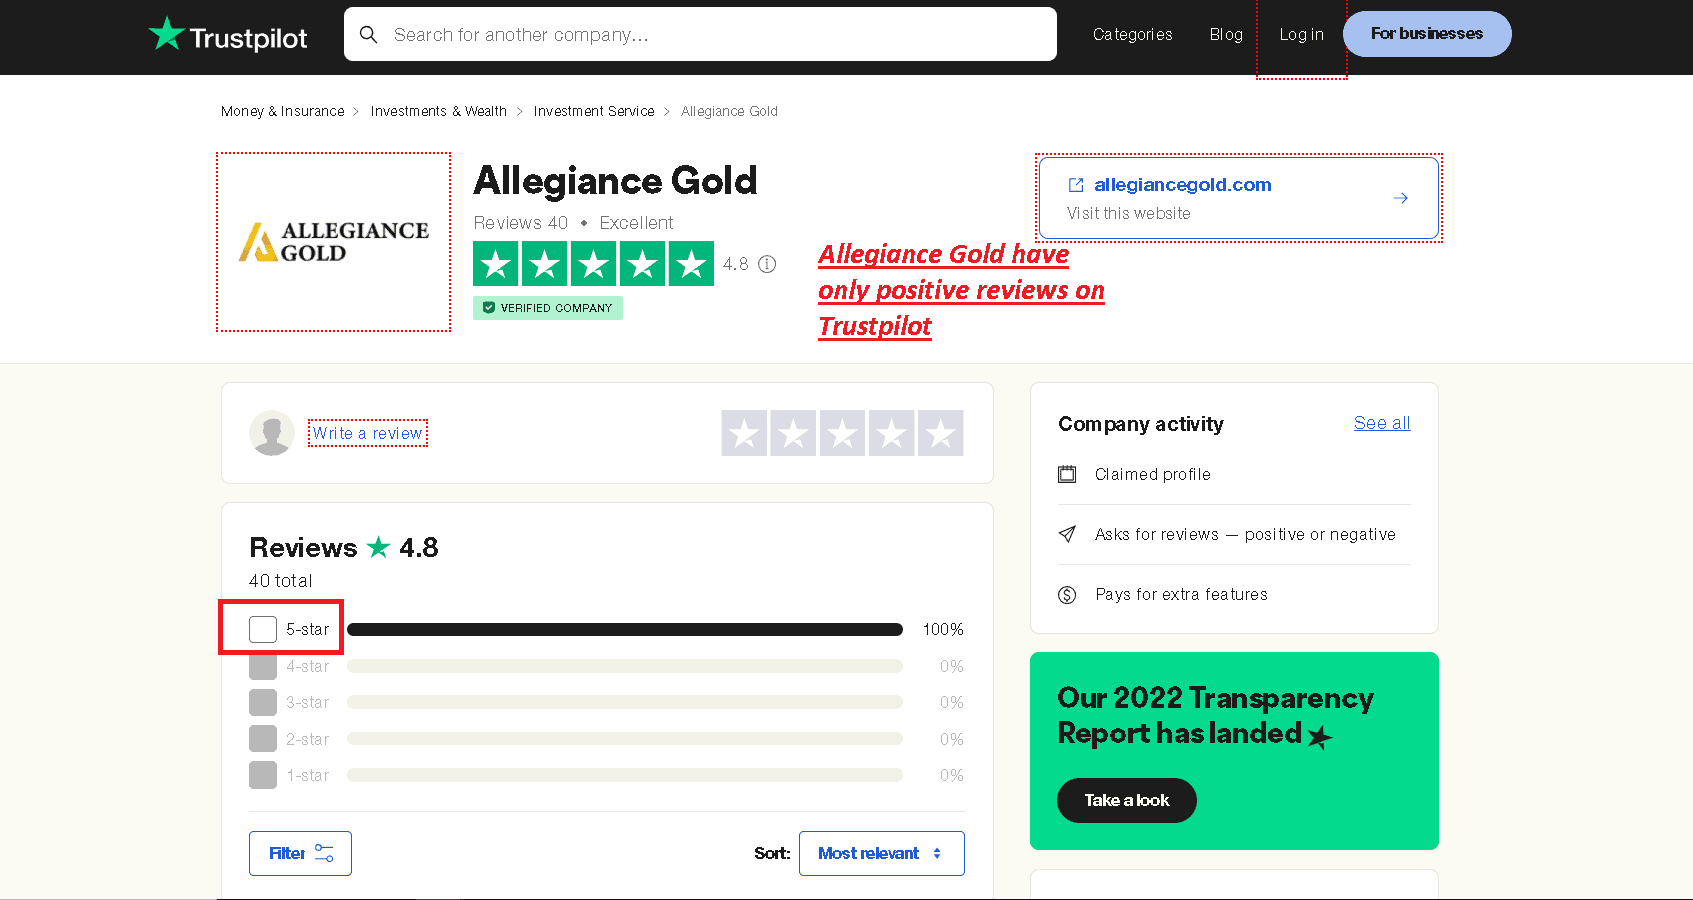 Allegiance Gold have no negative reviews and complaints on Trustpilot